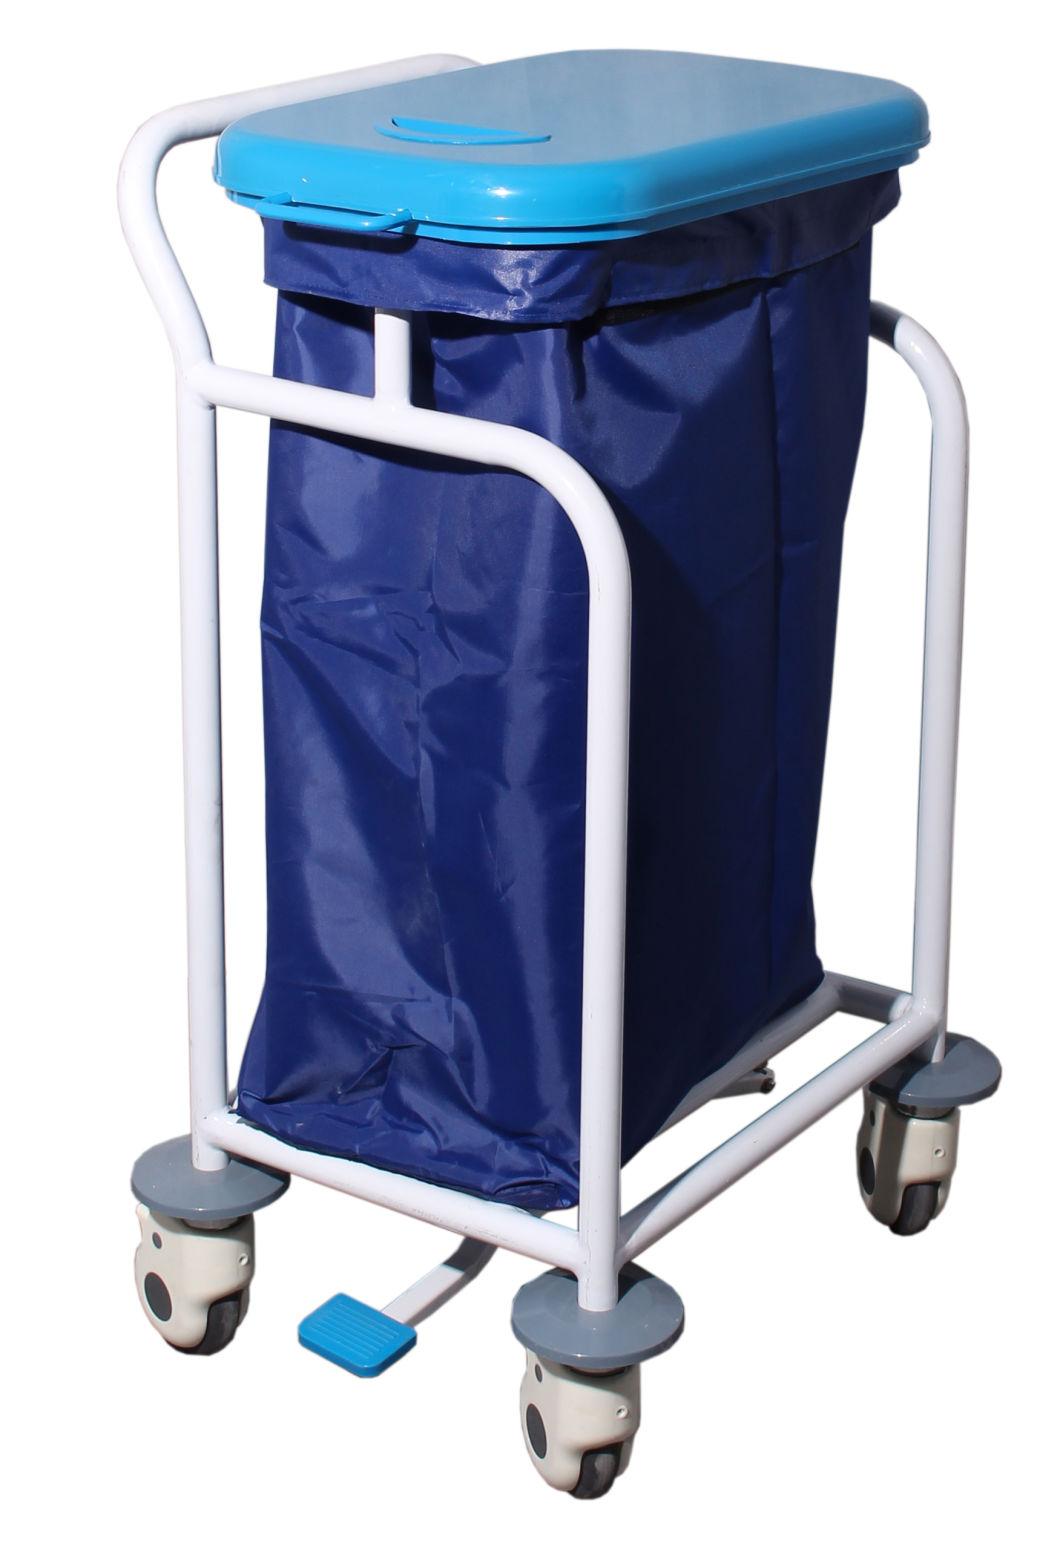 Hospital Dirty Linen Laundry Trolley Cart